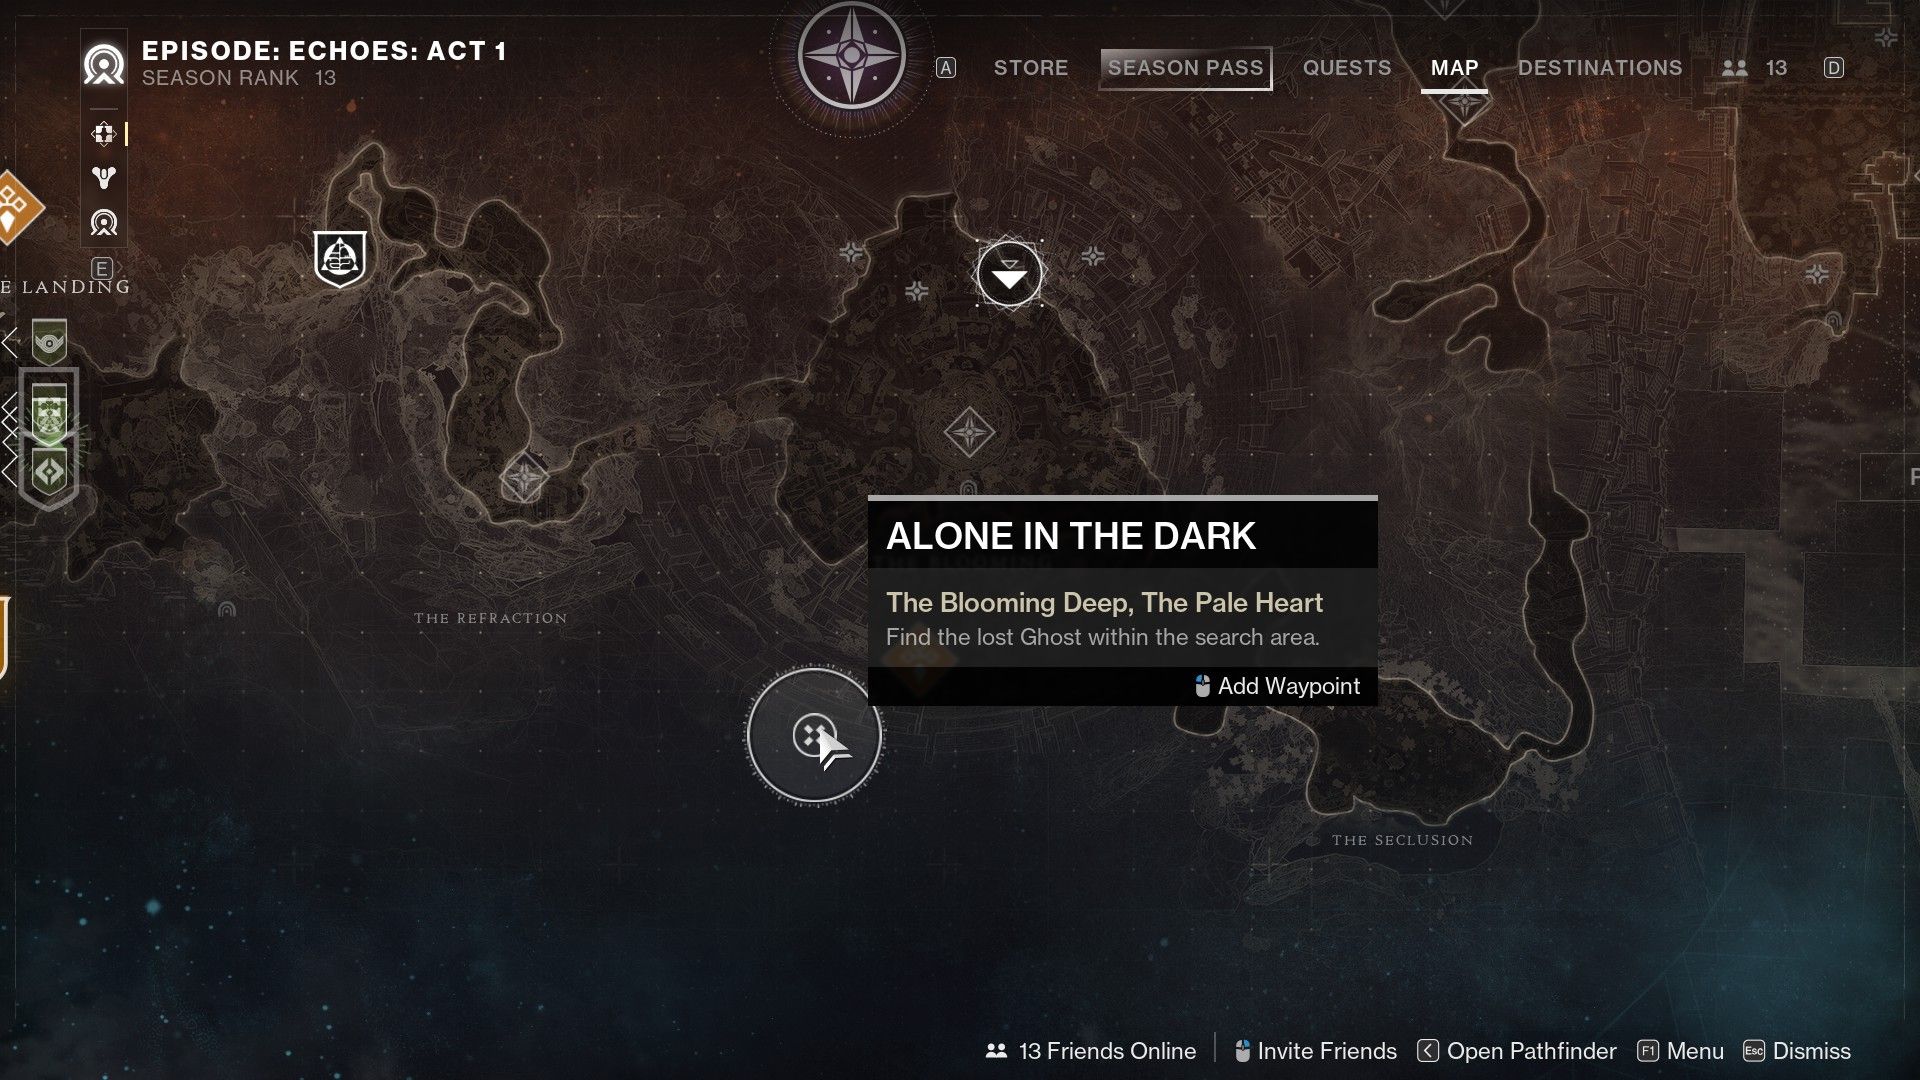 Alone in the Dark on Destiny 2's map screen